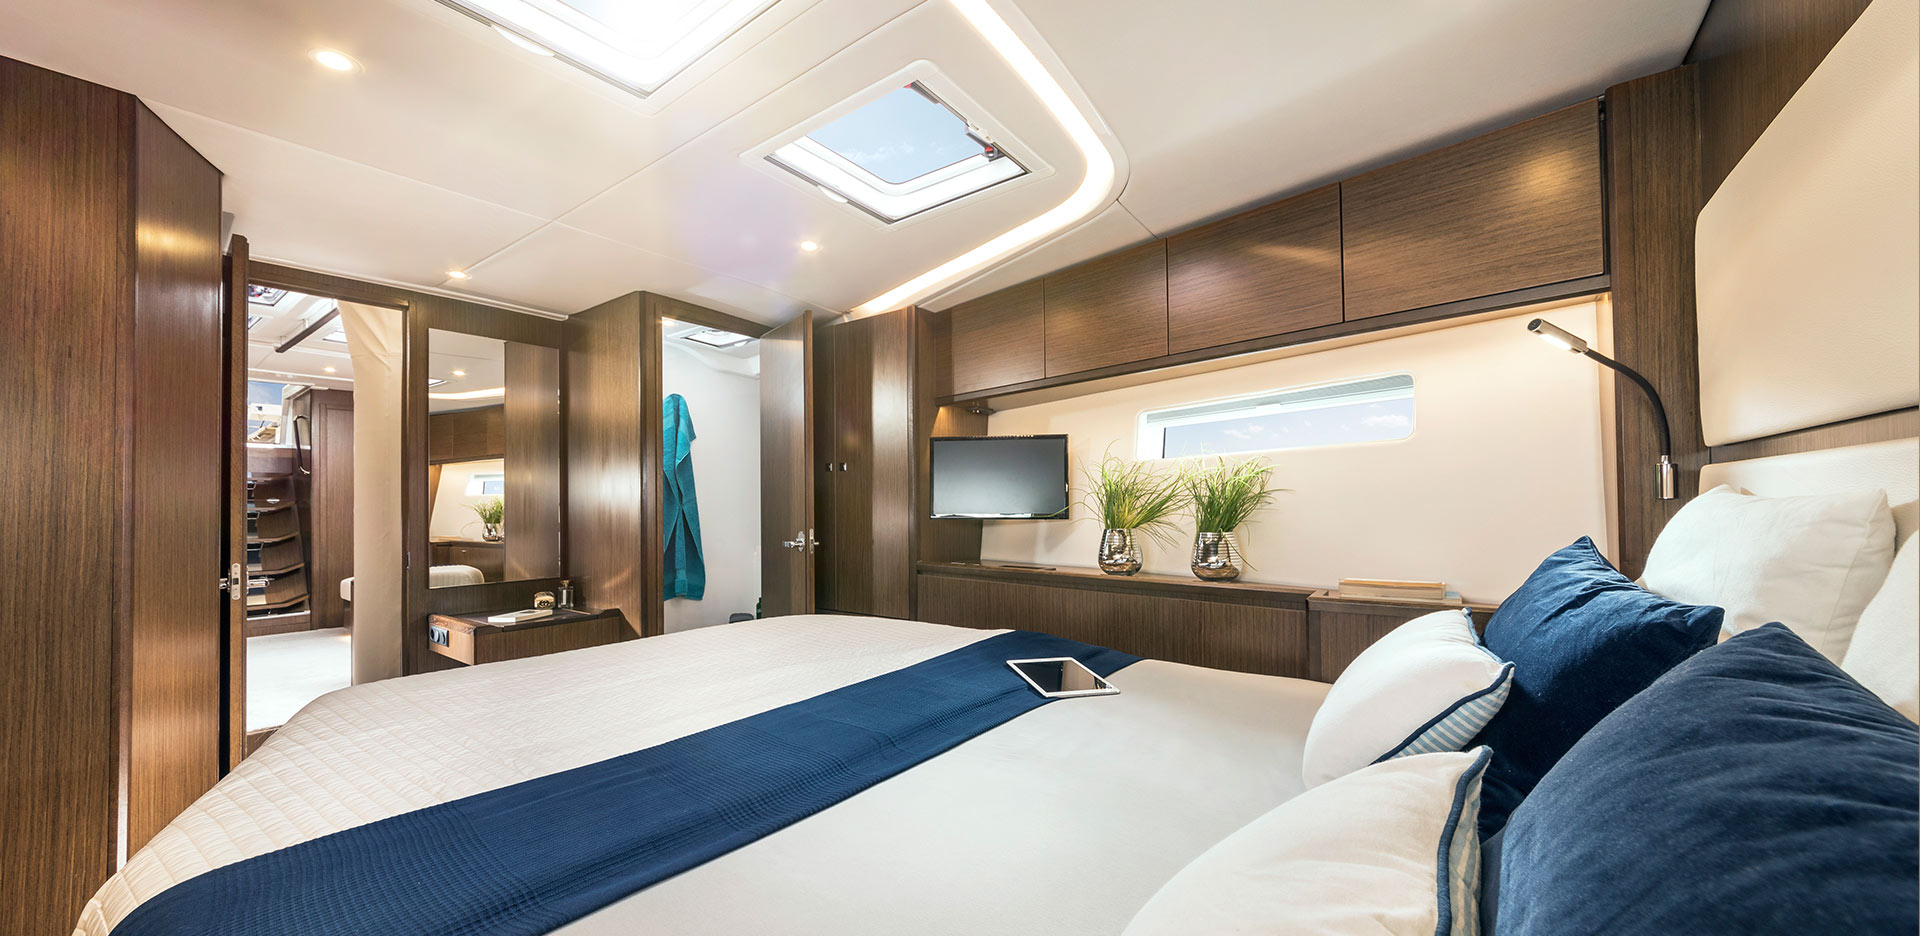 luxury sailing yacht bavaria c57 interior, bluemotion yacht charter, sailing in croatia, luxury sailing holidays